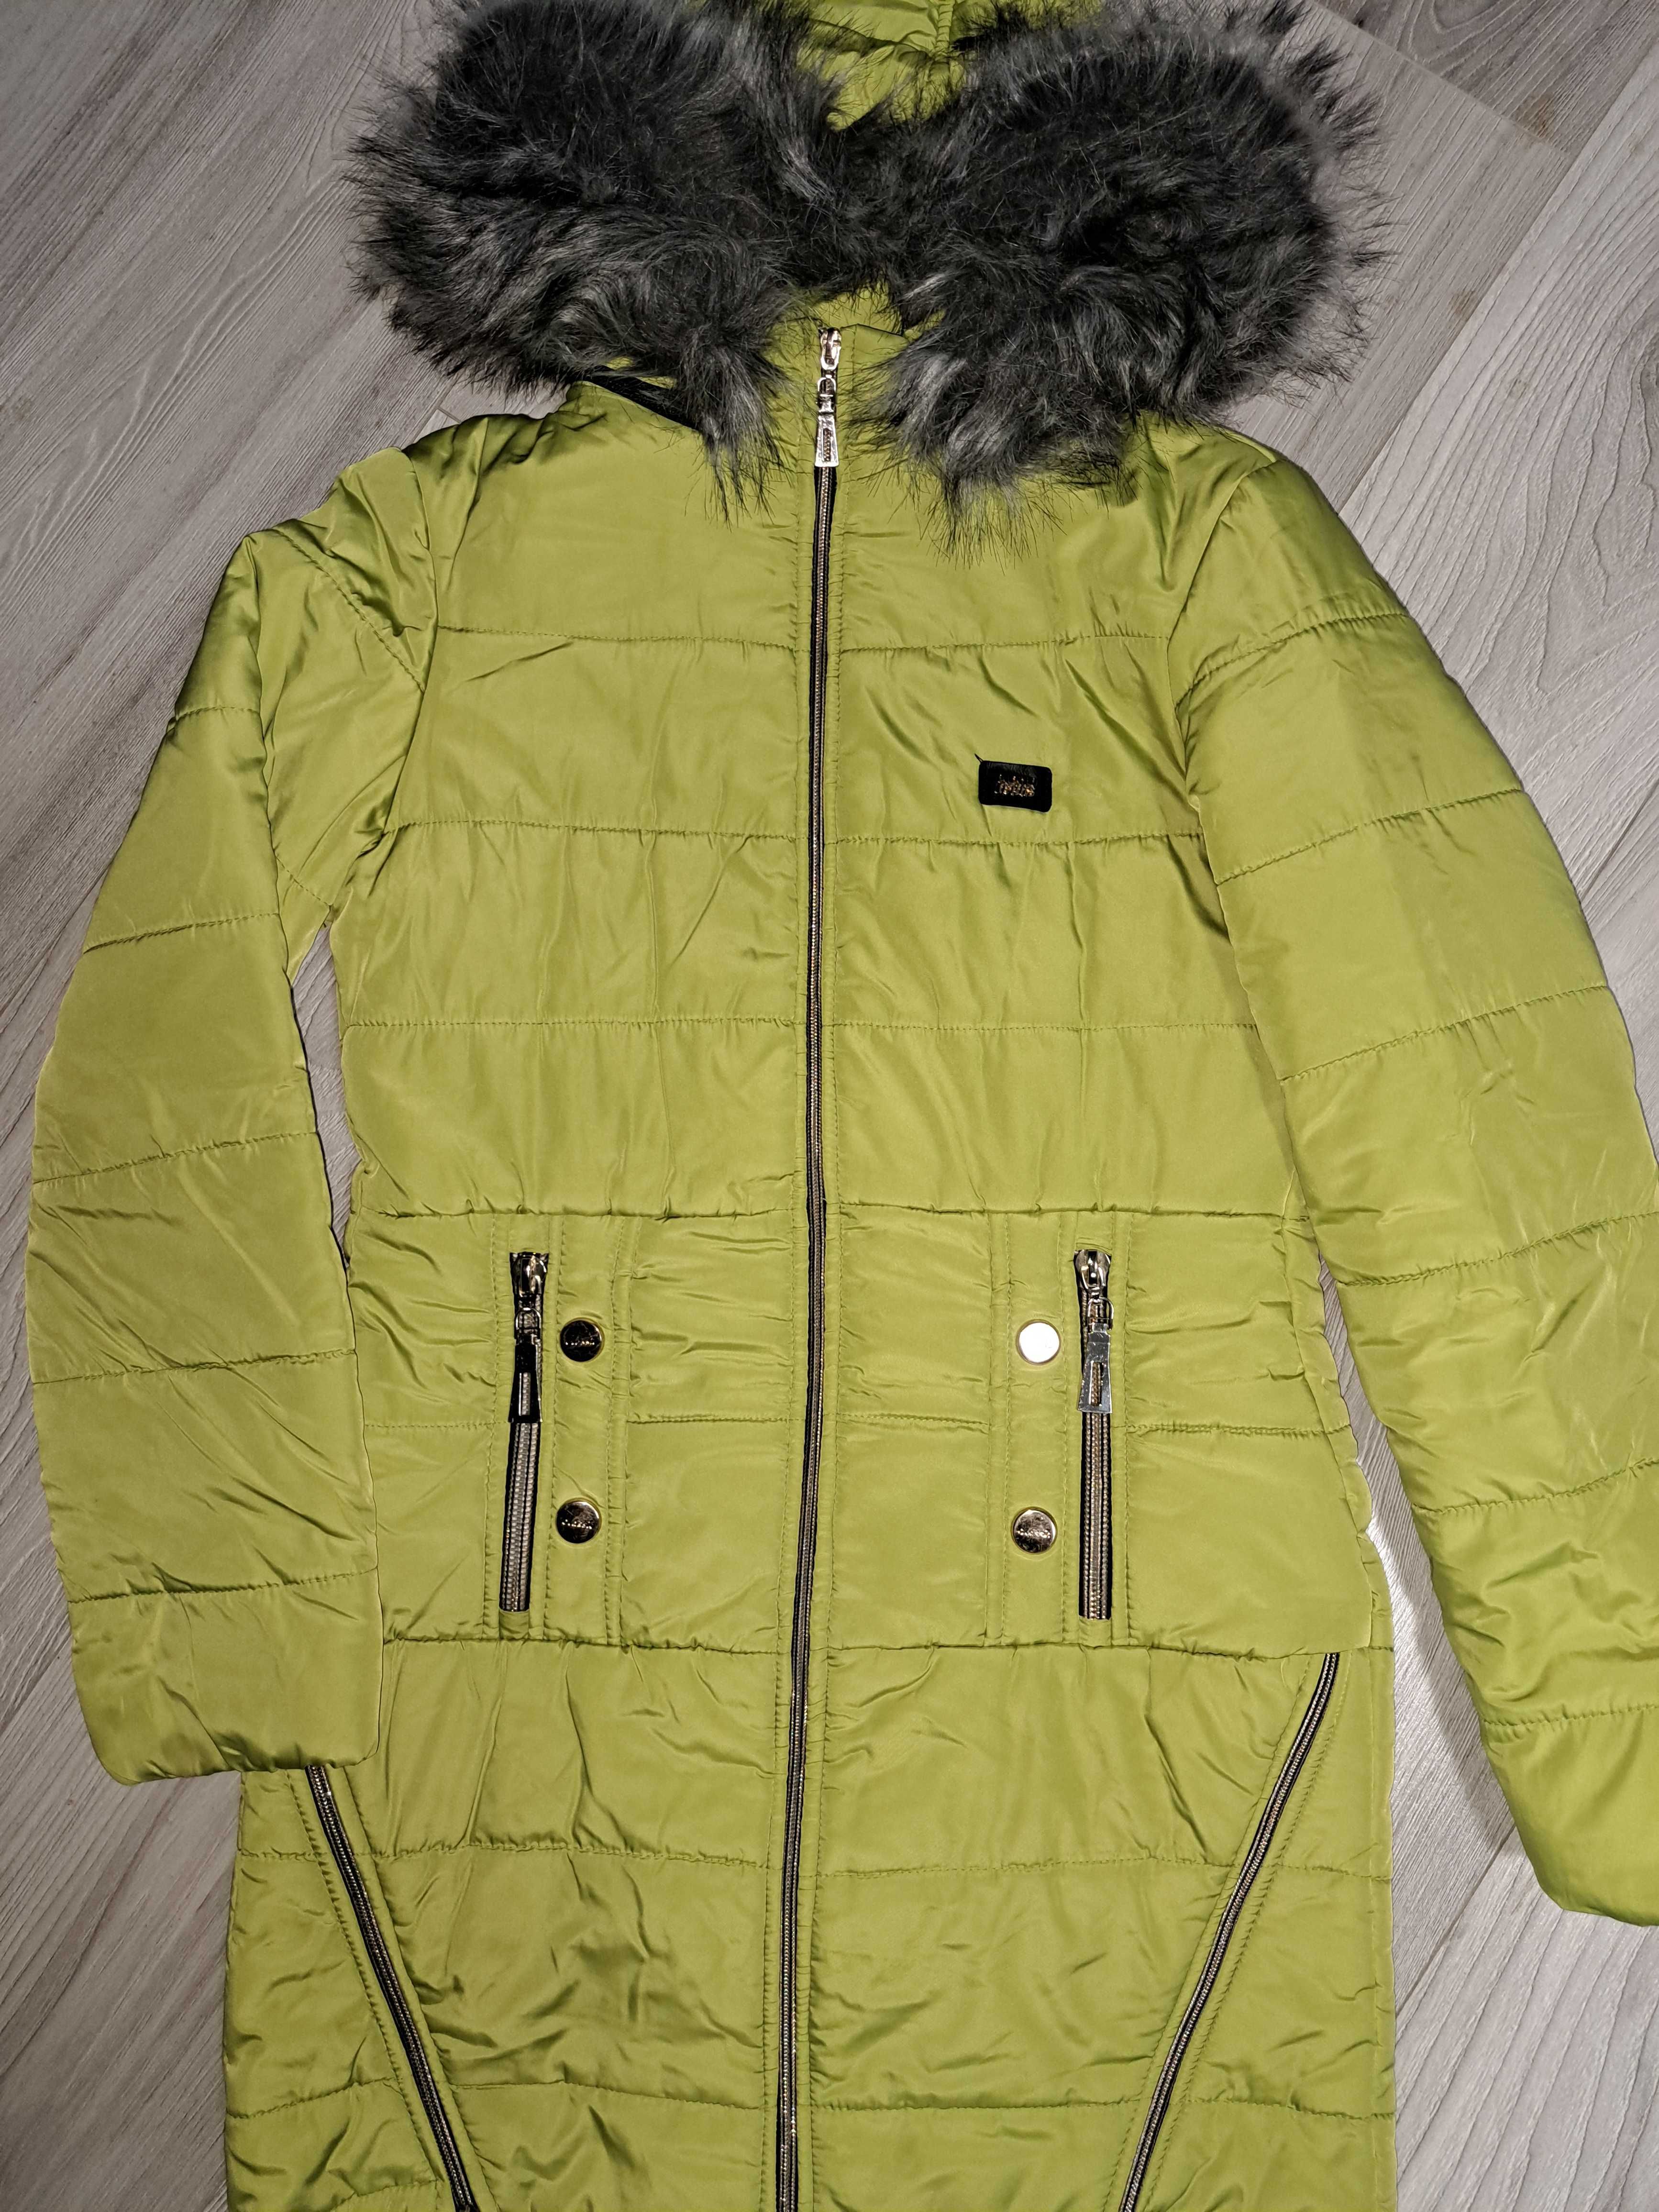 Куртка пальто еврозима 156р